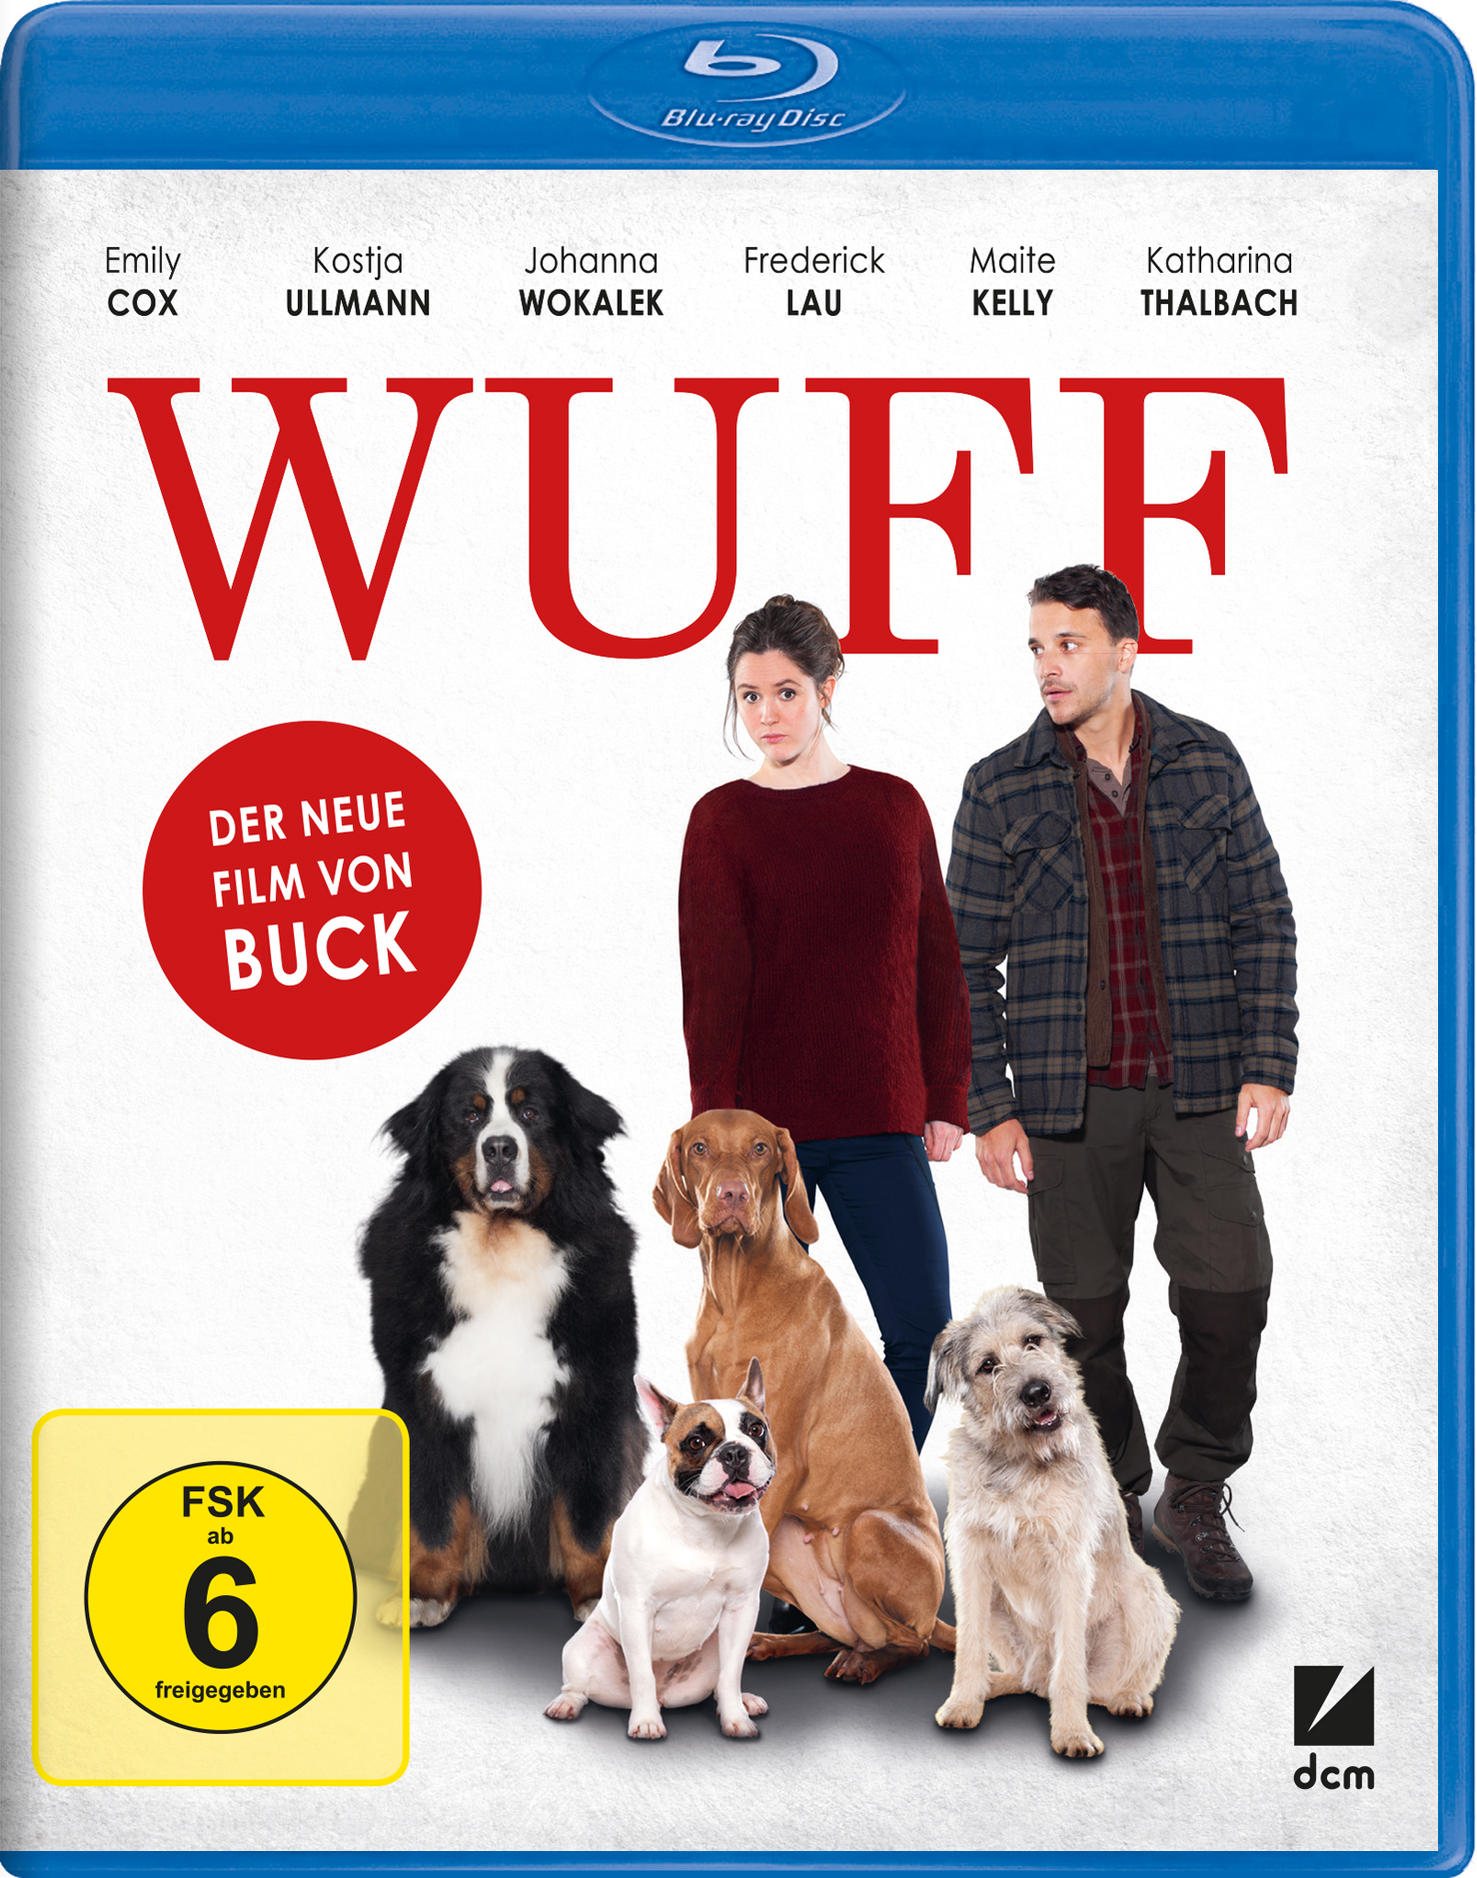 Wuff Blu-ray